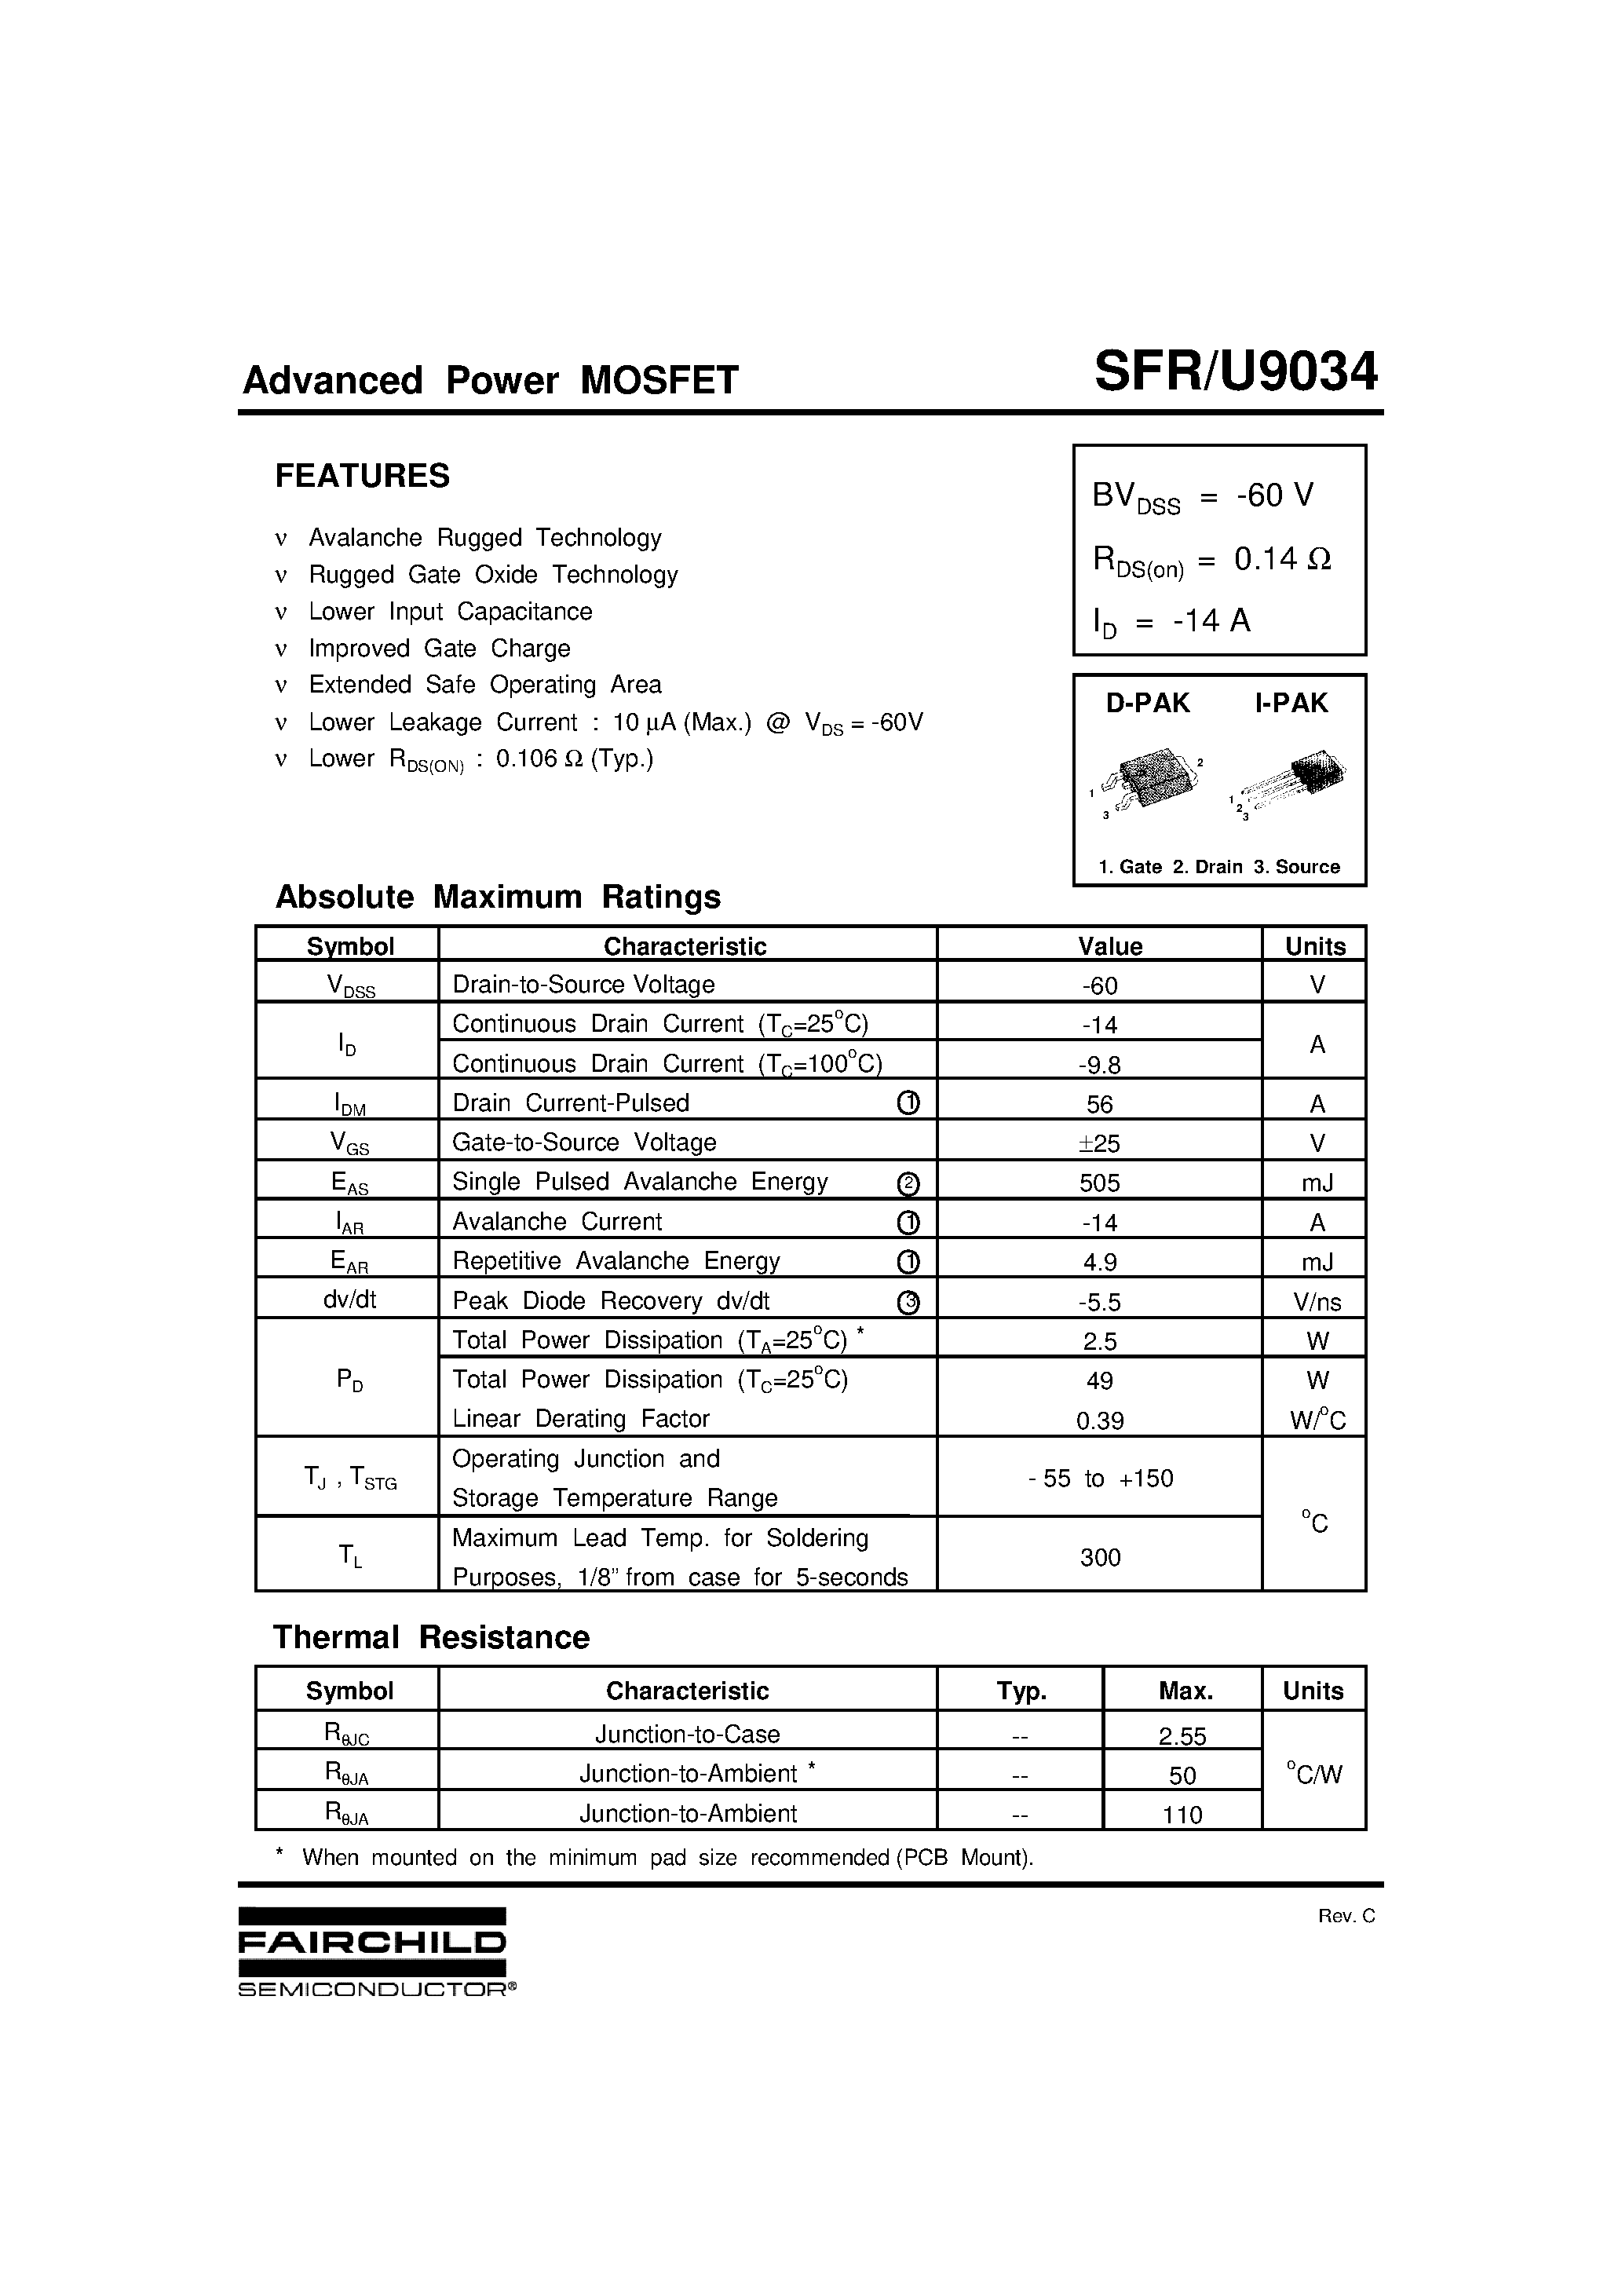 Datasheet SFRU9034 - Advanced Power MOSFET page 1